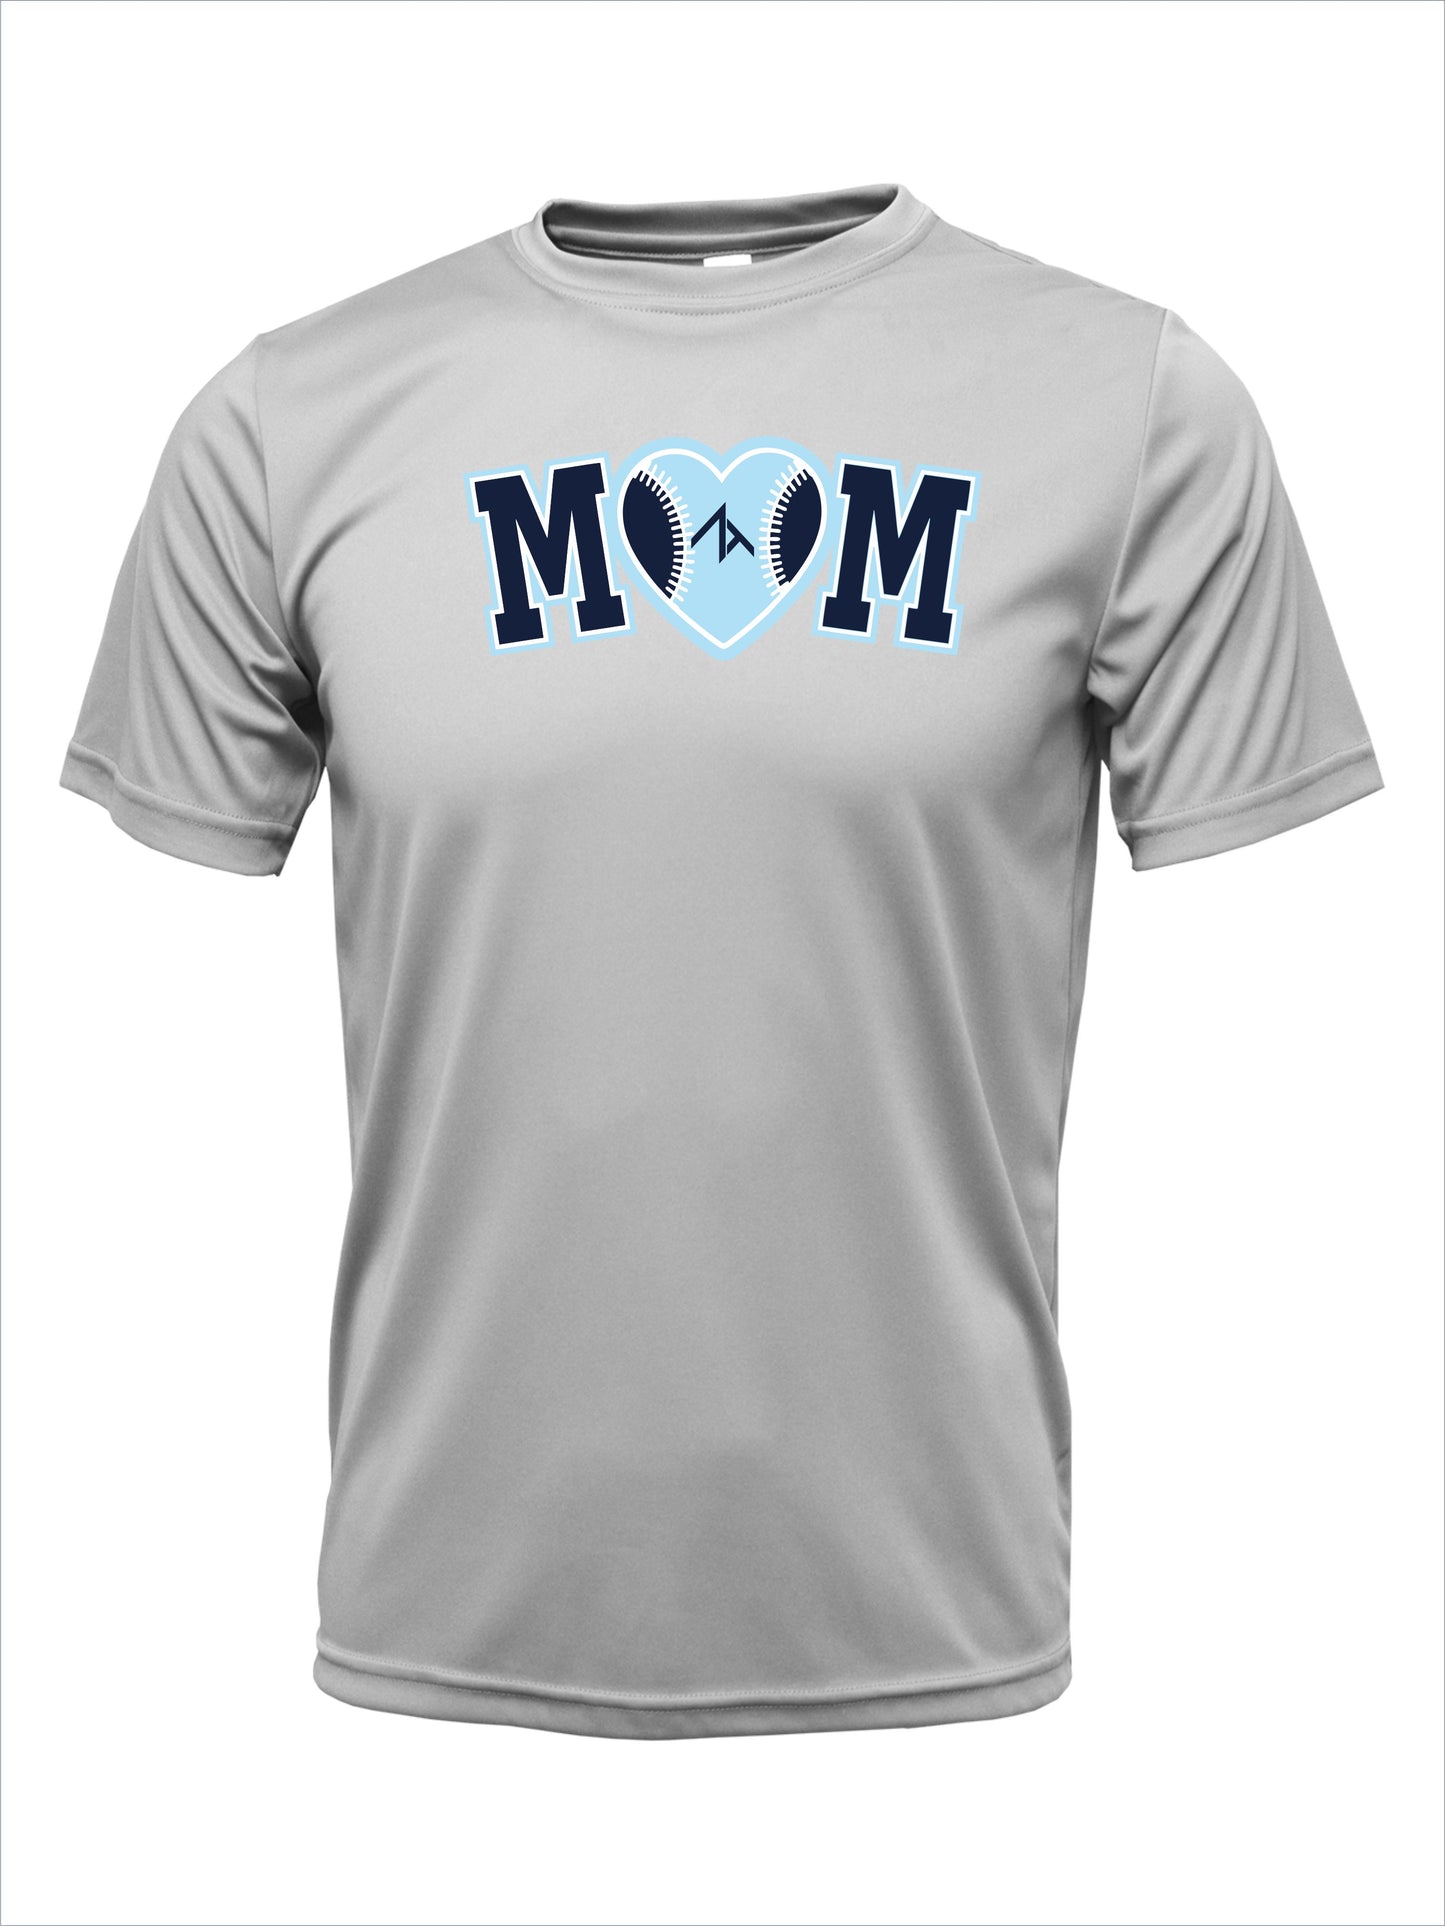 Short Sleeve "ZT MOM" Dri-Fit T-Shirt